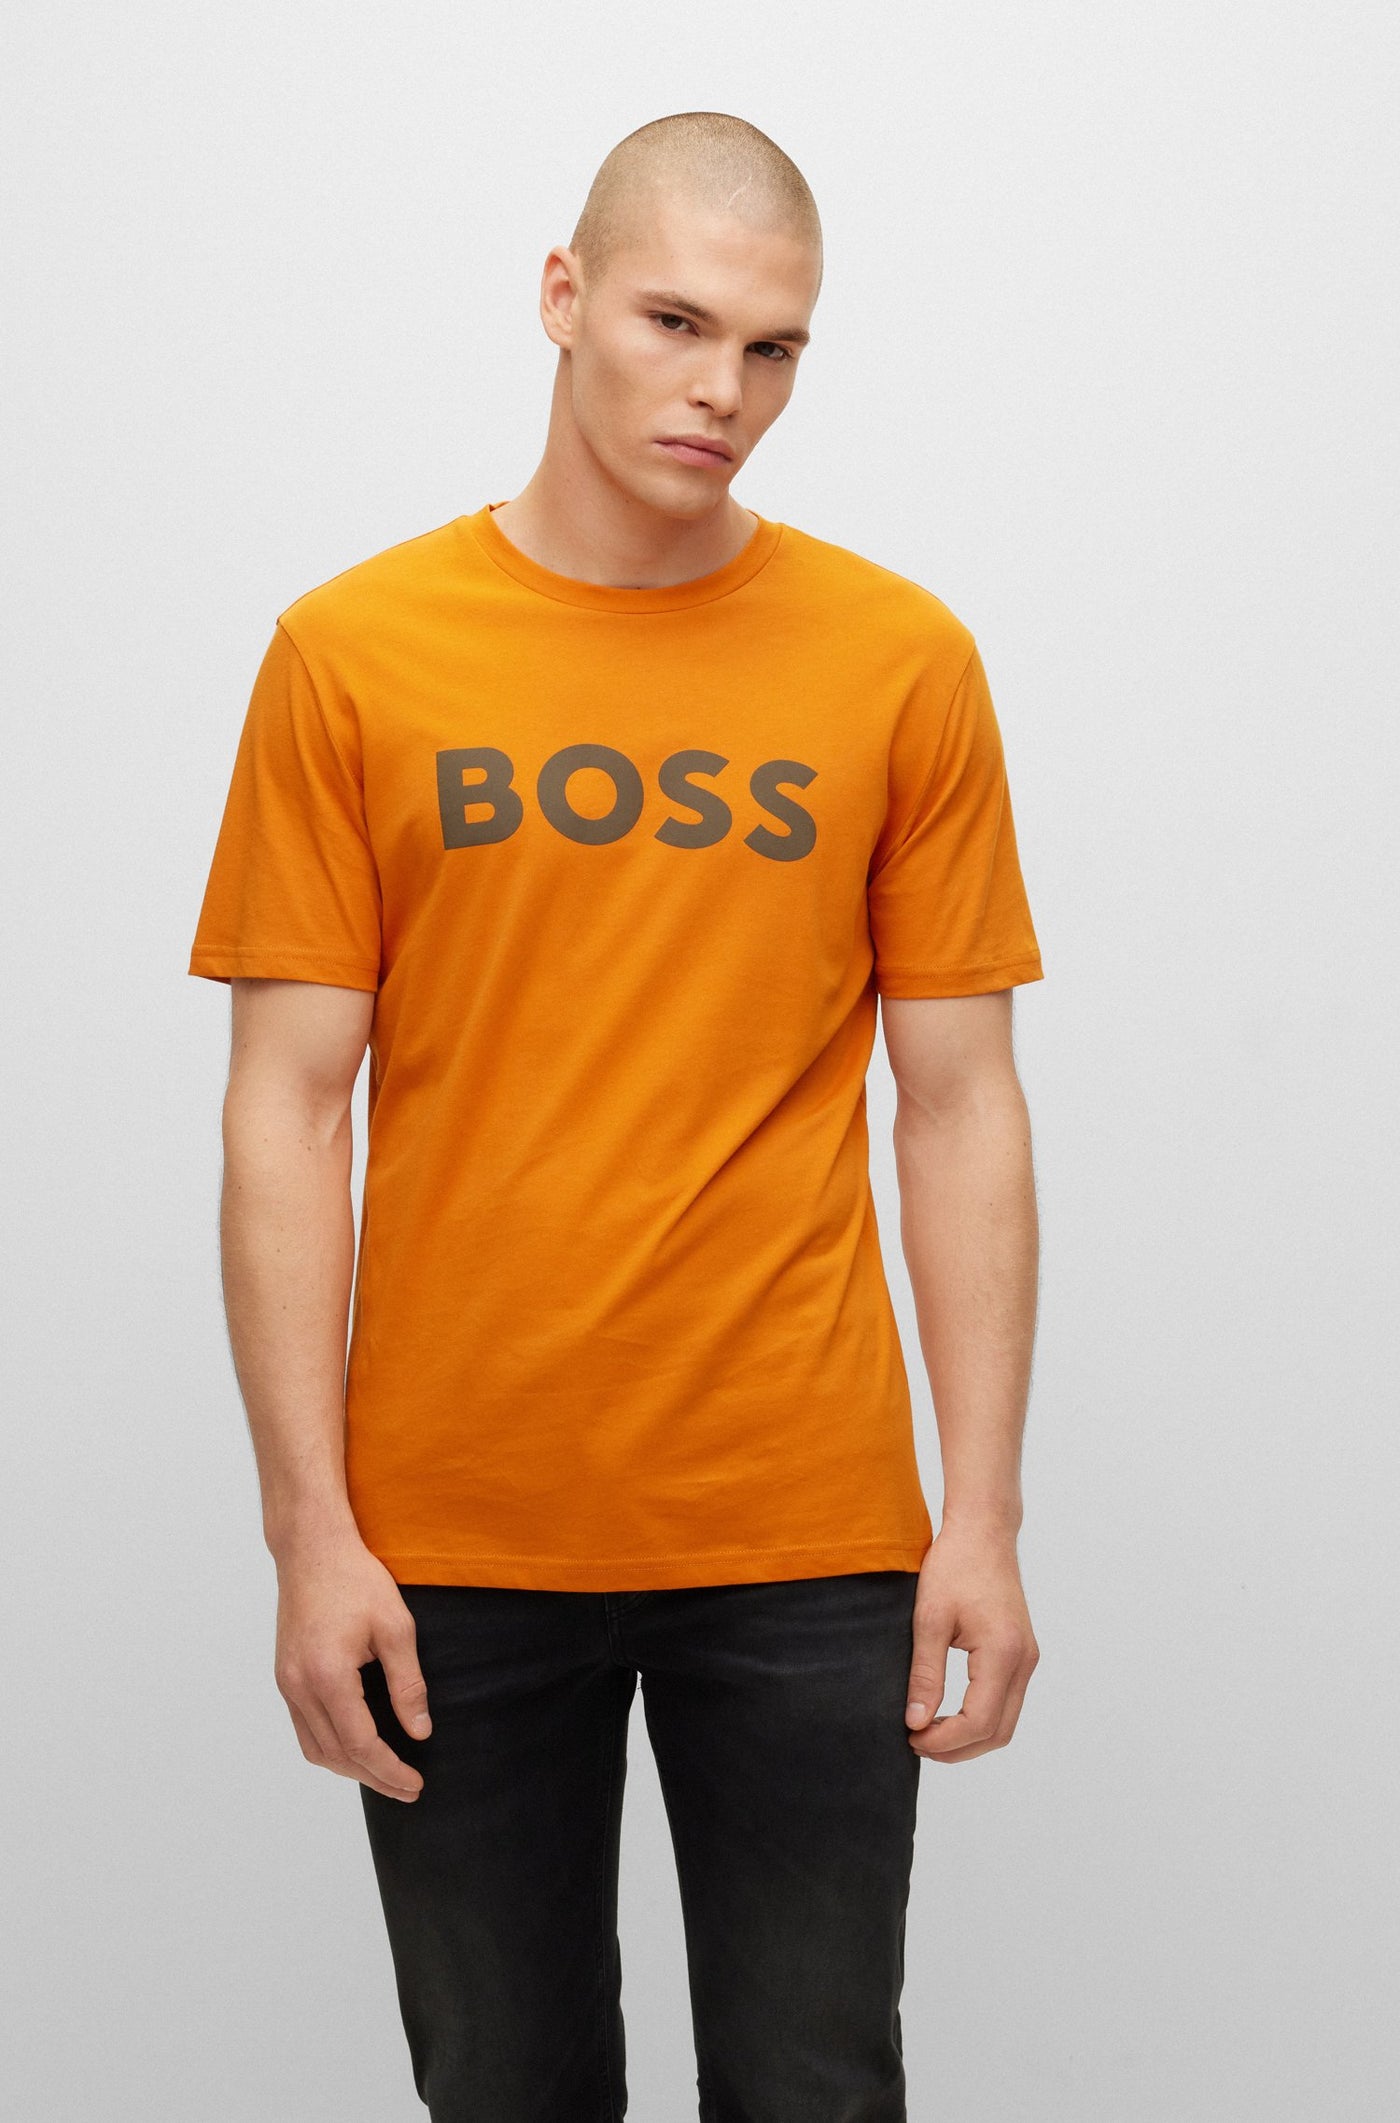 Men's Hugo Boss Thinking 1 T-shirt - Orange